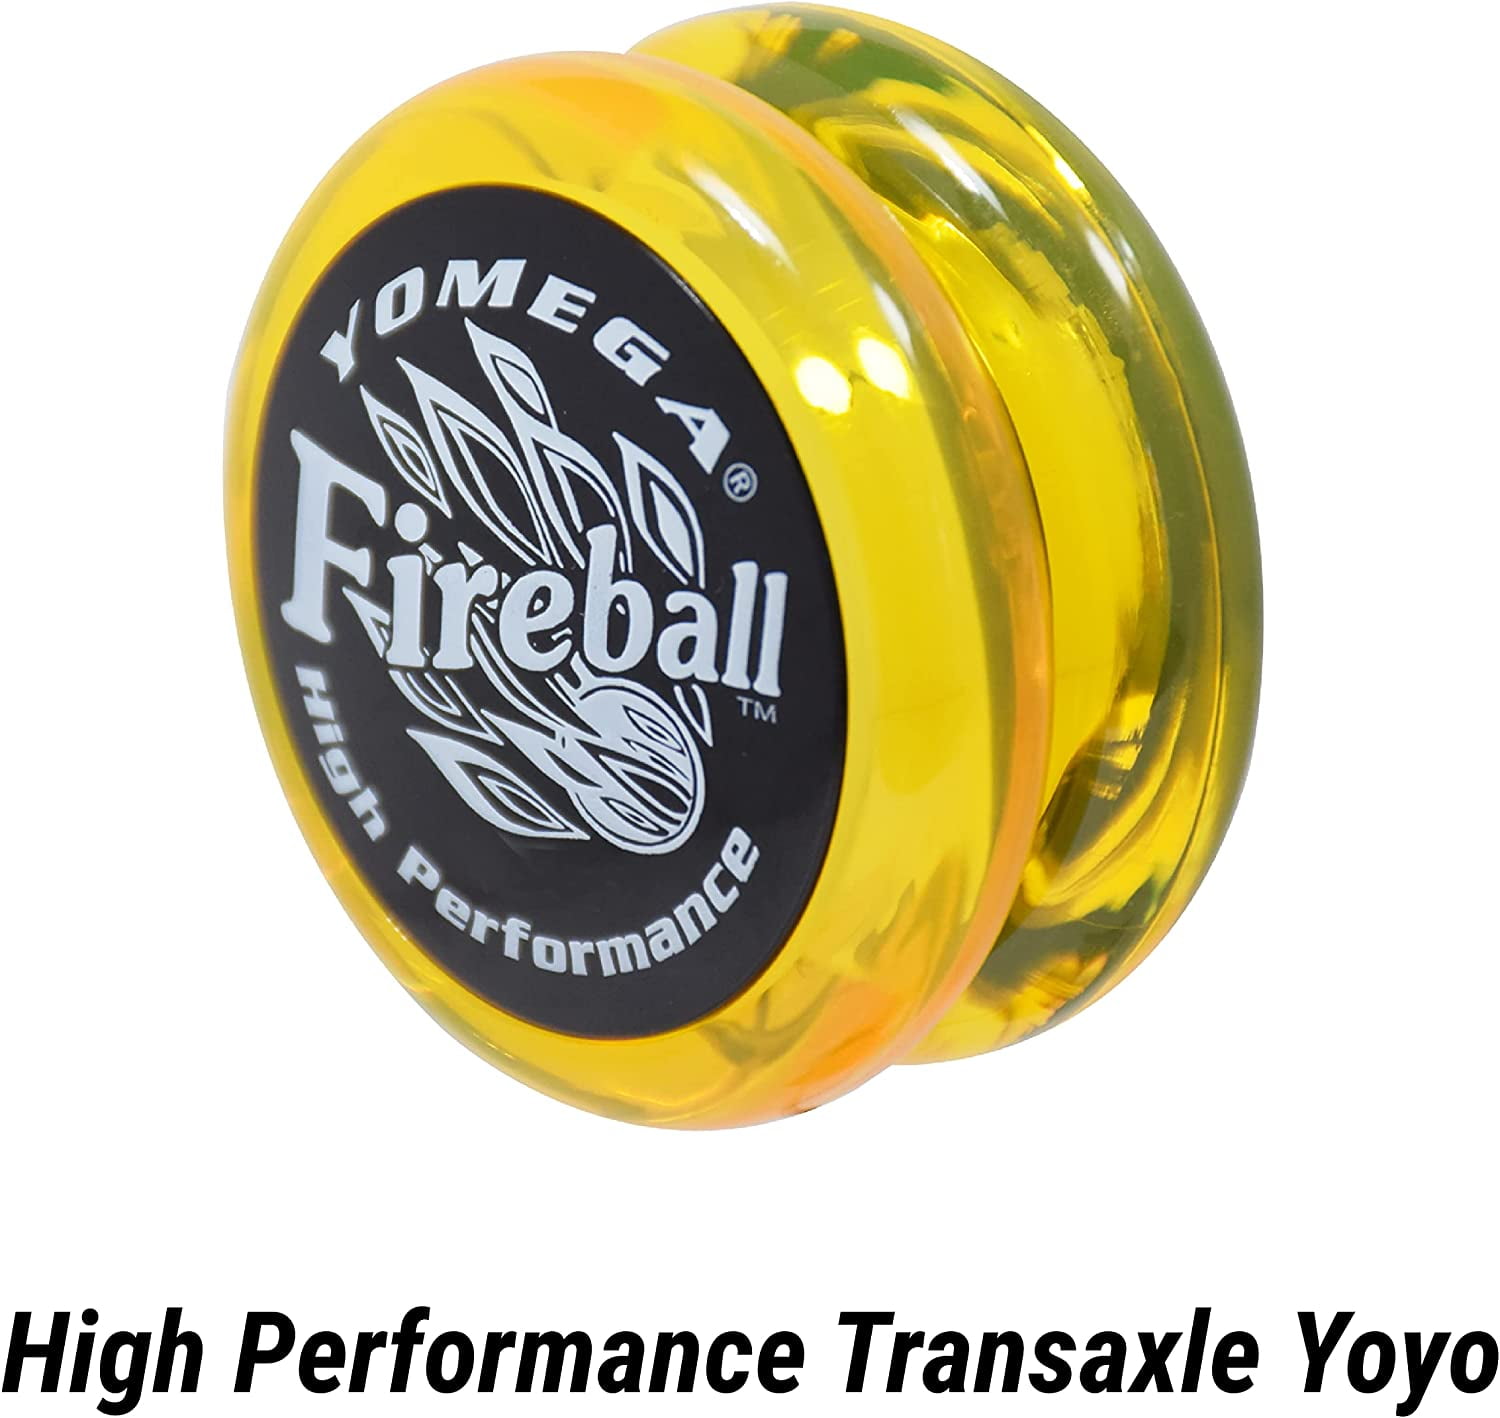 Yomega Fireball - Professional Responsive Transaxle Yoyo